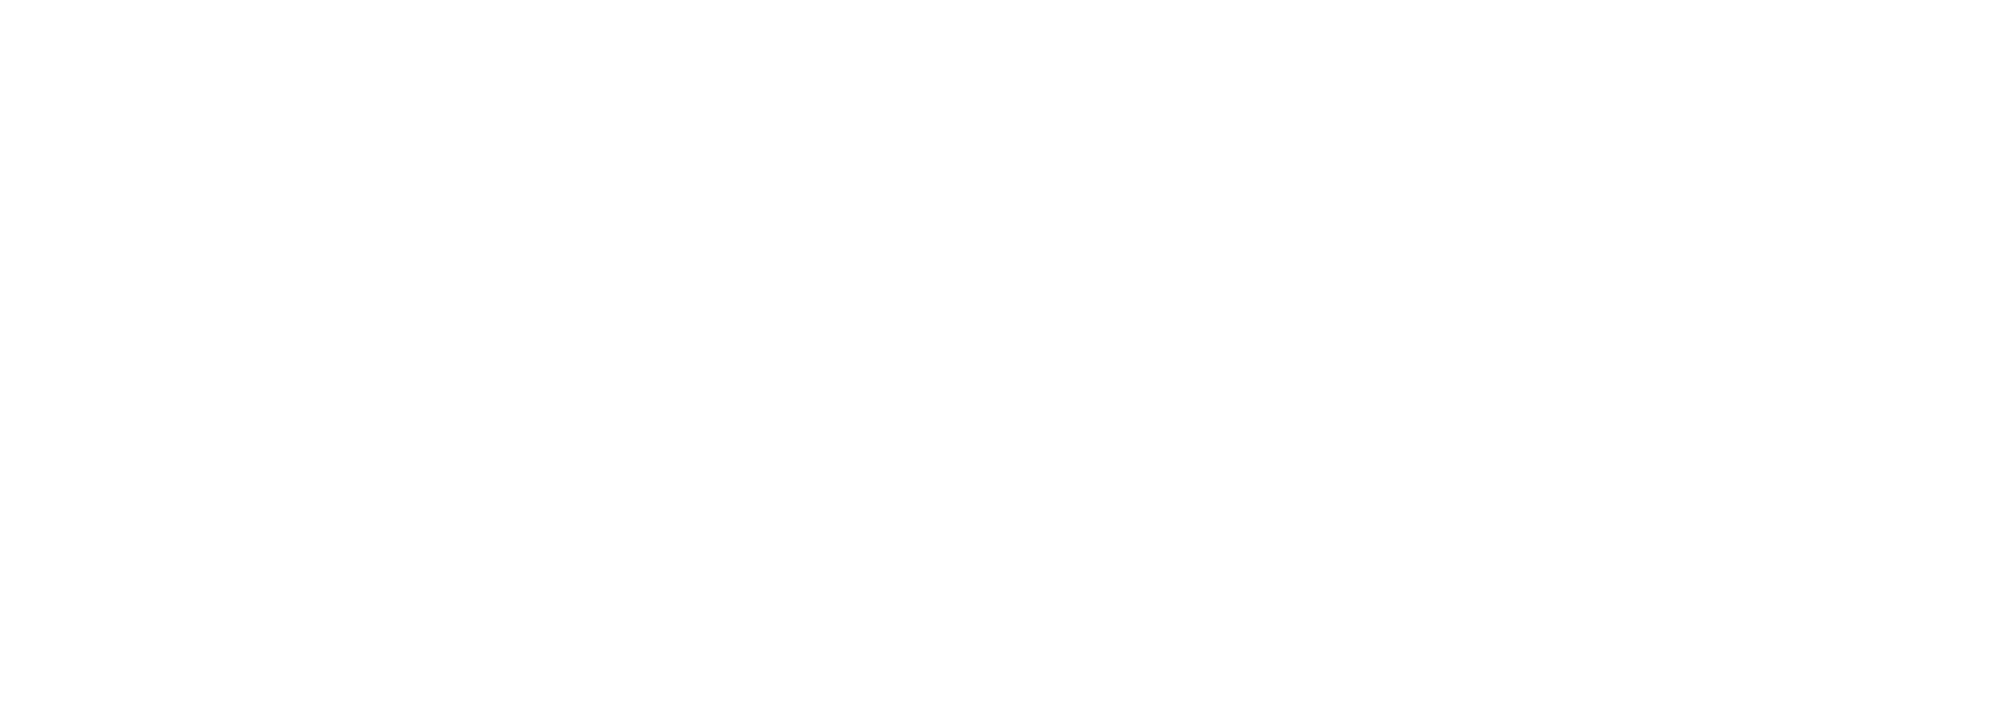 exempt-nonexempt-icon-pattern